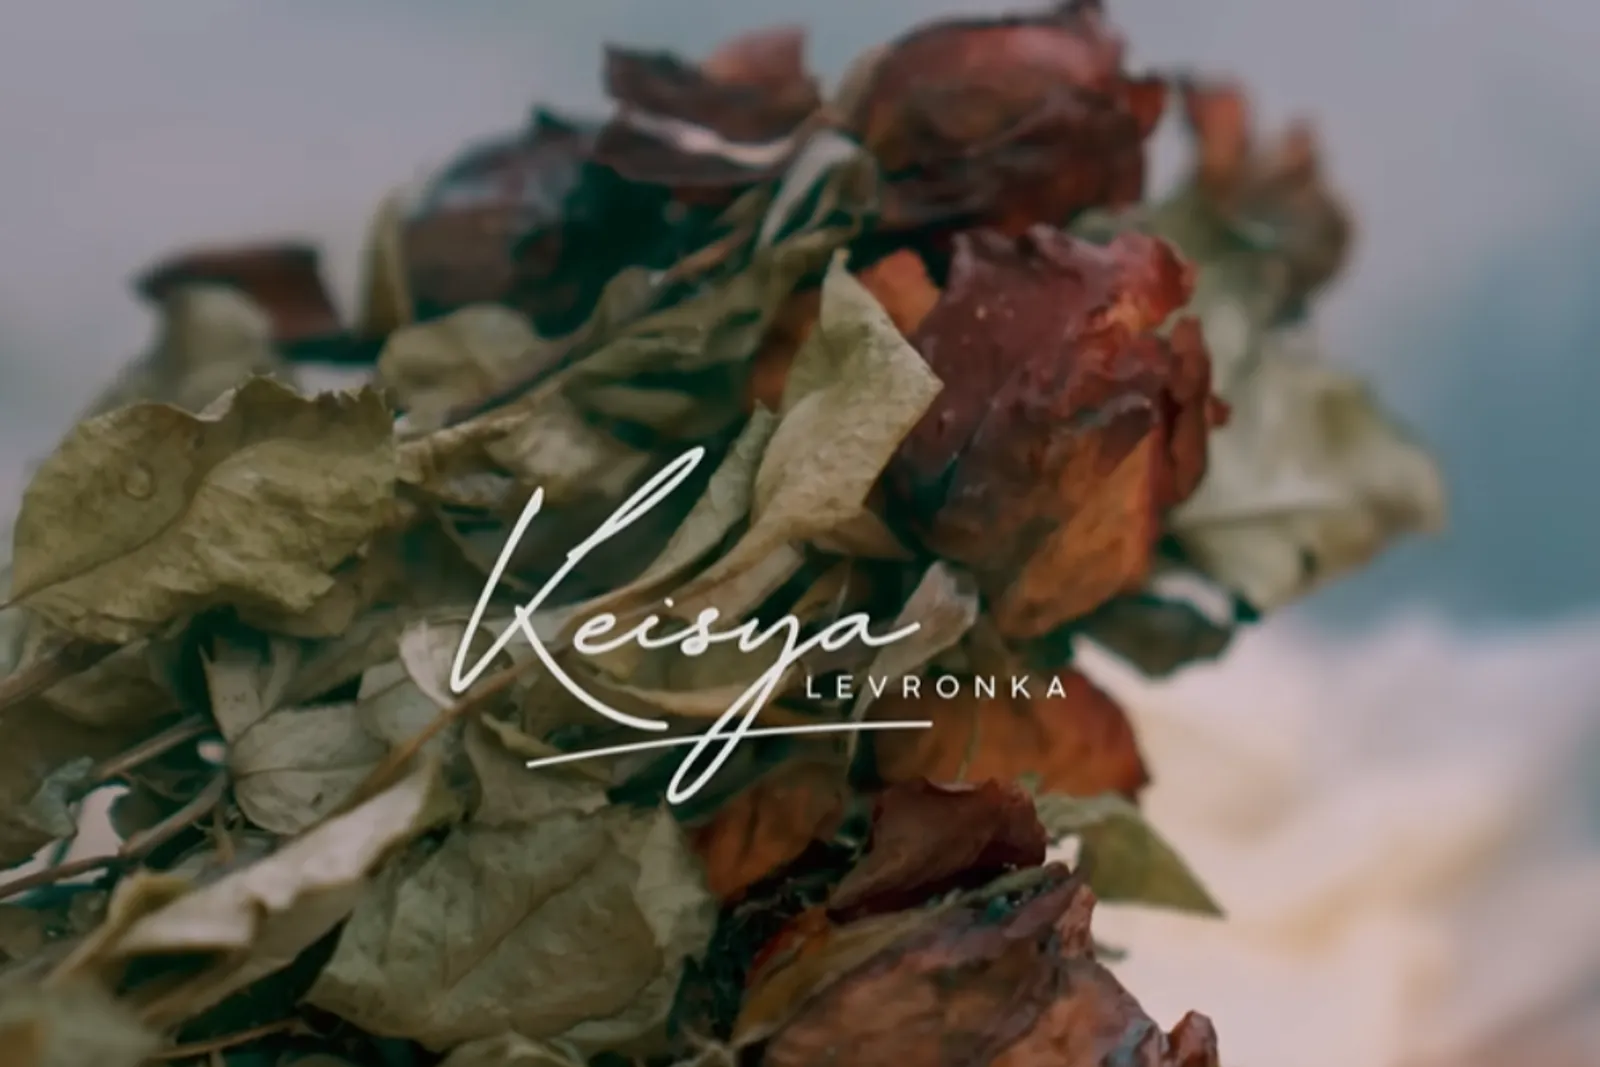 Lirik Lagu "Tak Ingin Usai" - Keisya Levronka, Tentang Patah Hati